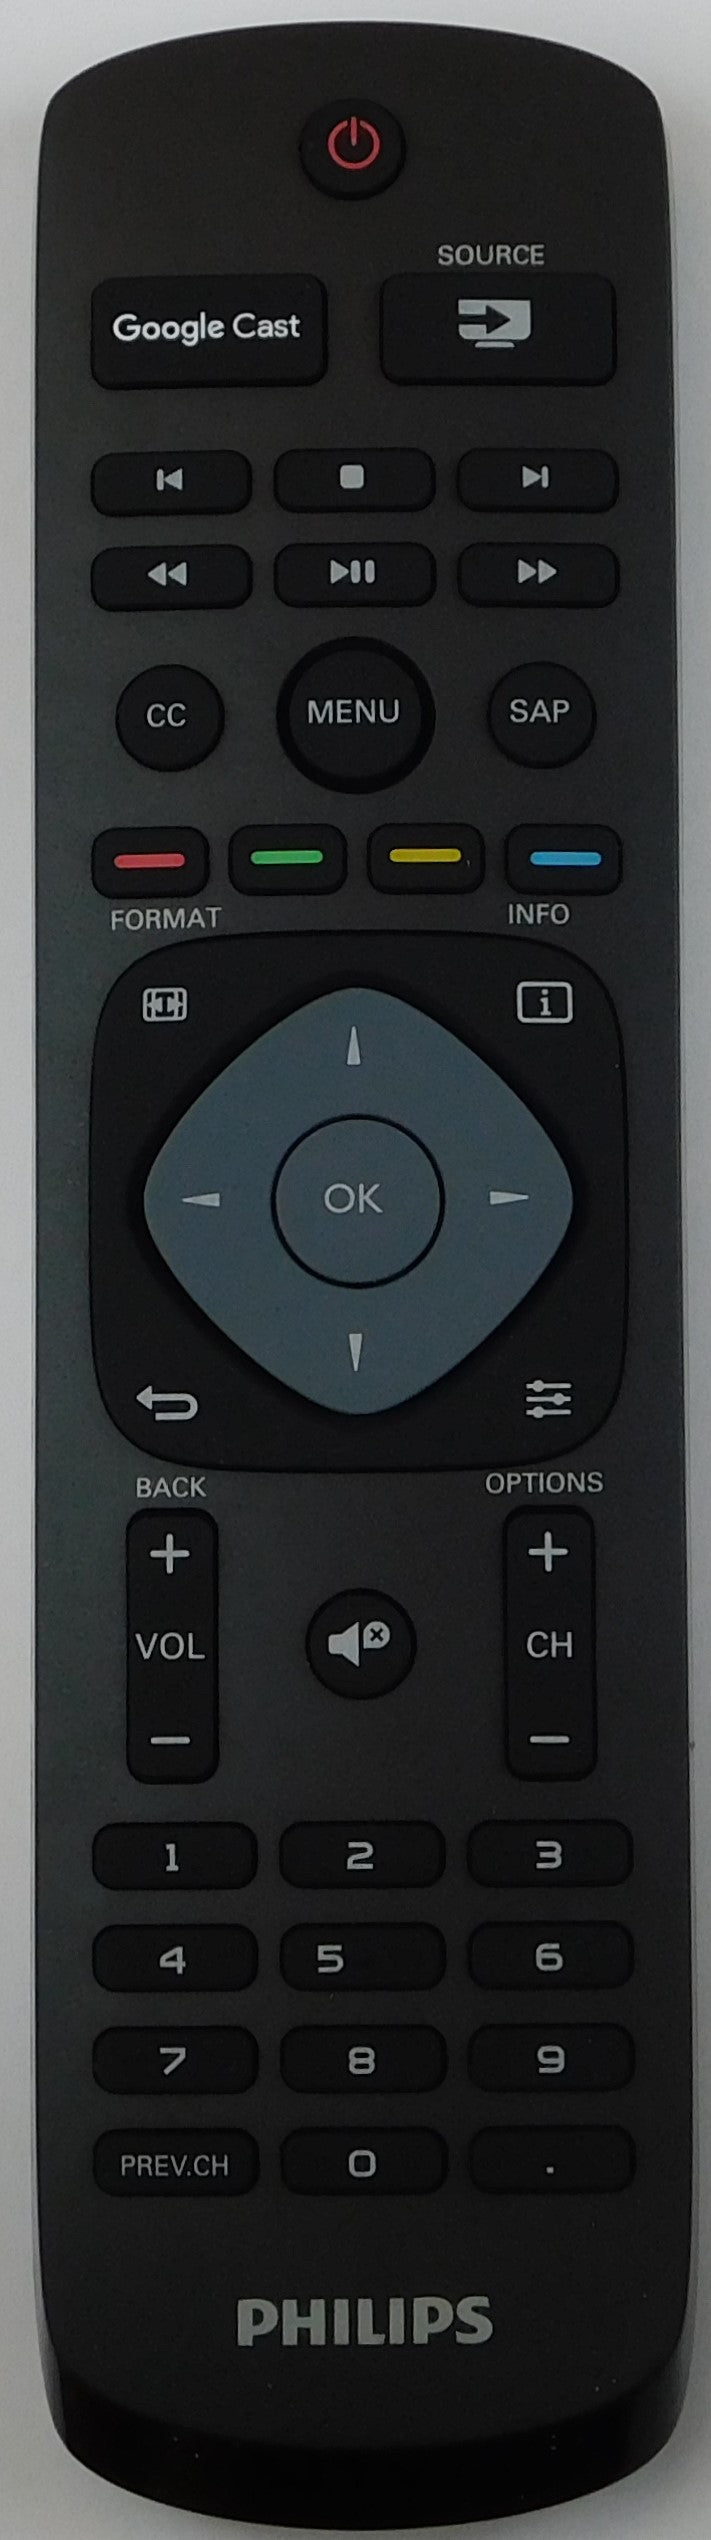 Original OEM replacement remote control for Philips Google's Cast TVs URMT42JHG006